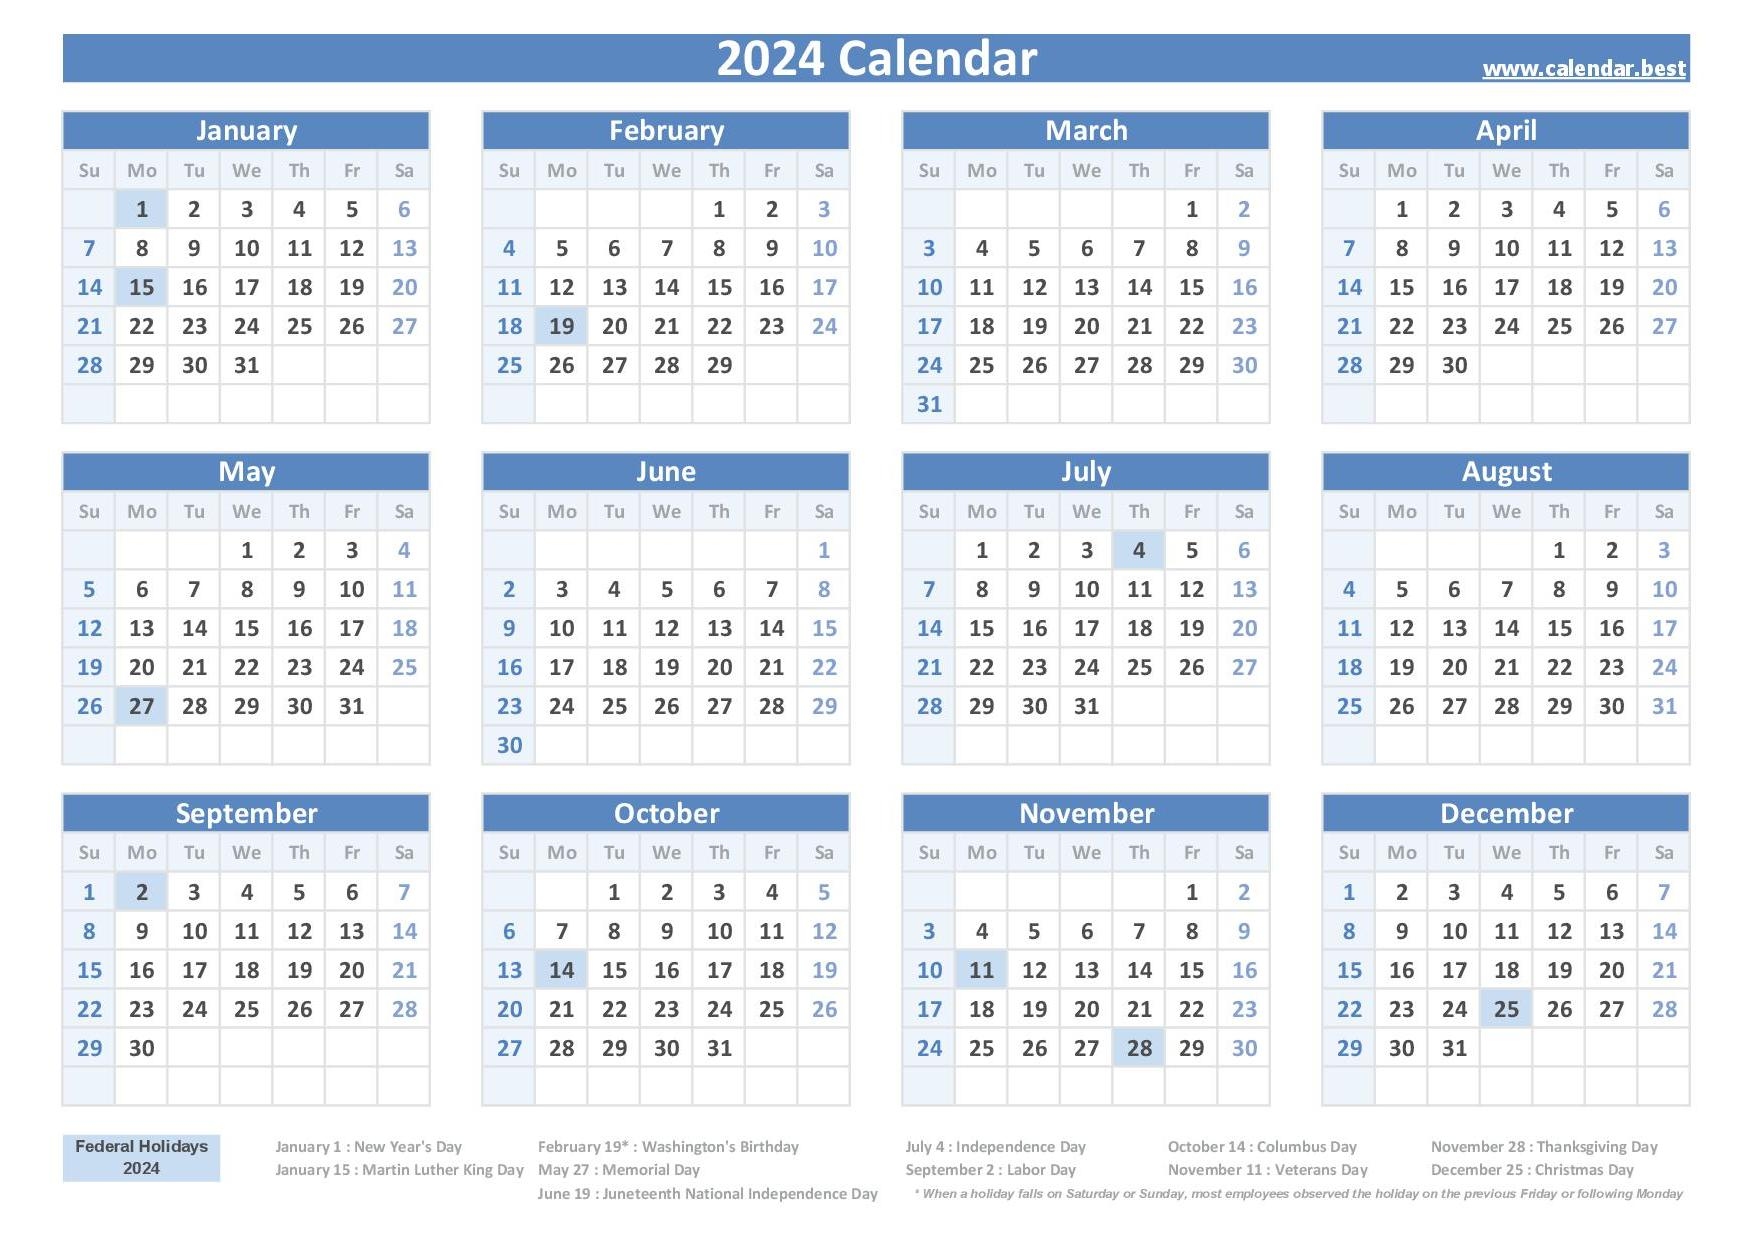 2024 Us Federal Holiday Calendar Printable Bill Marjie - Free Printable 2024 Calendar With Daily Holidays